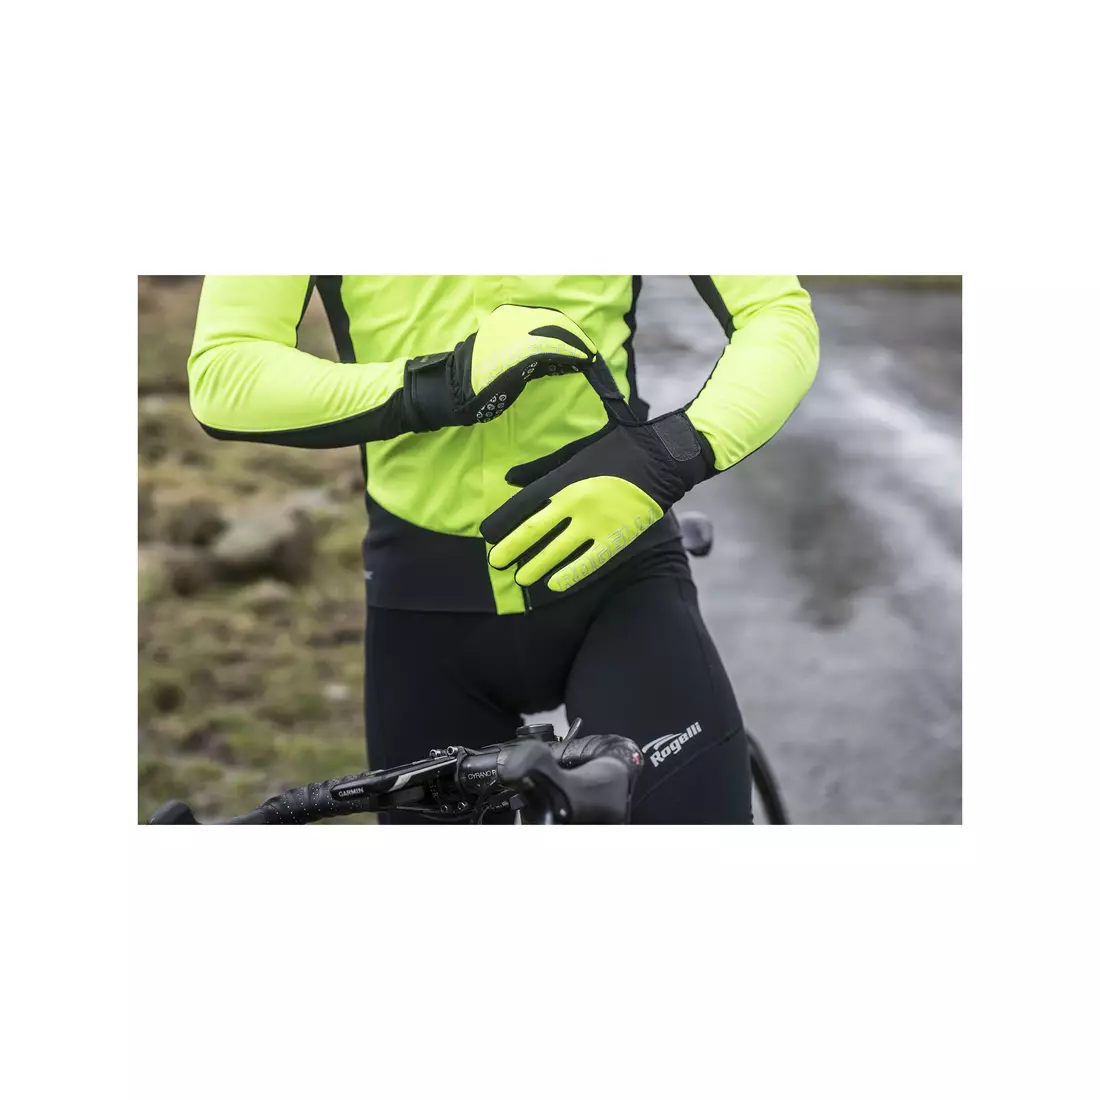 ROGELLI STORM winter cycling gloves, softshell, fluor